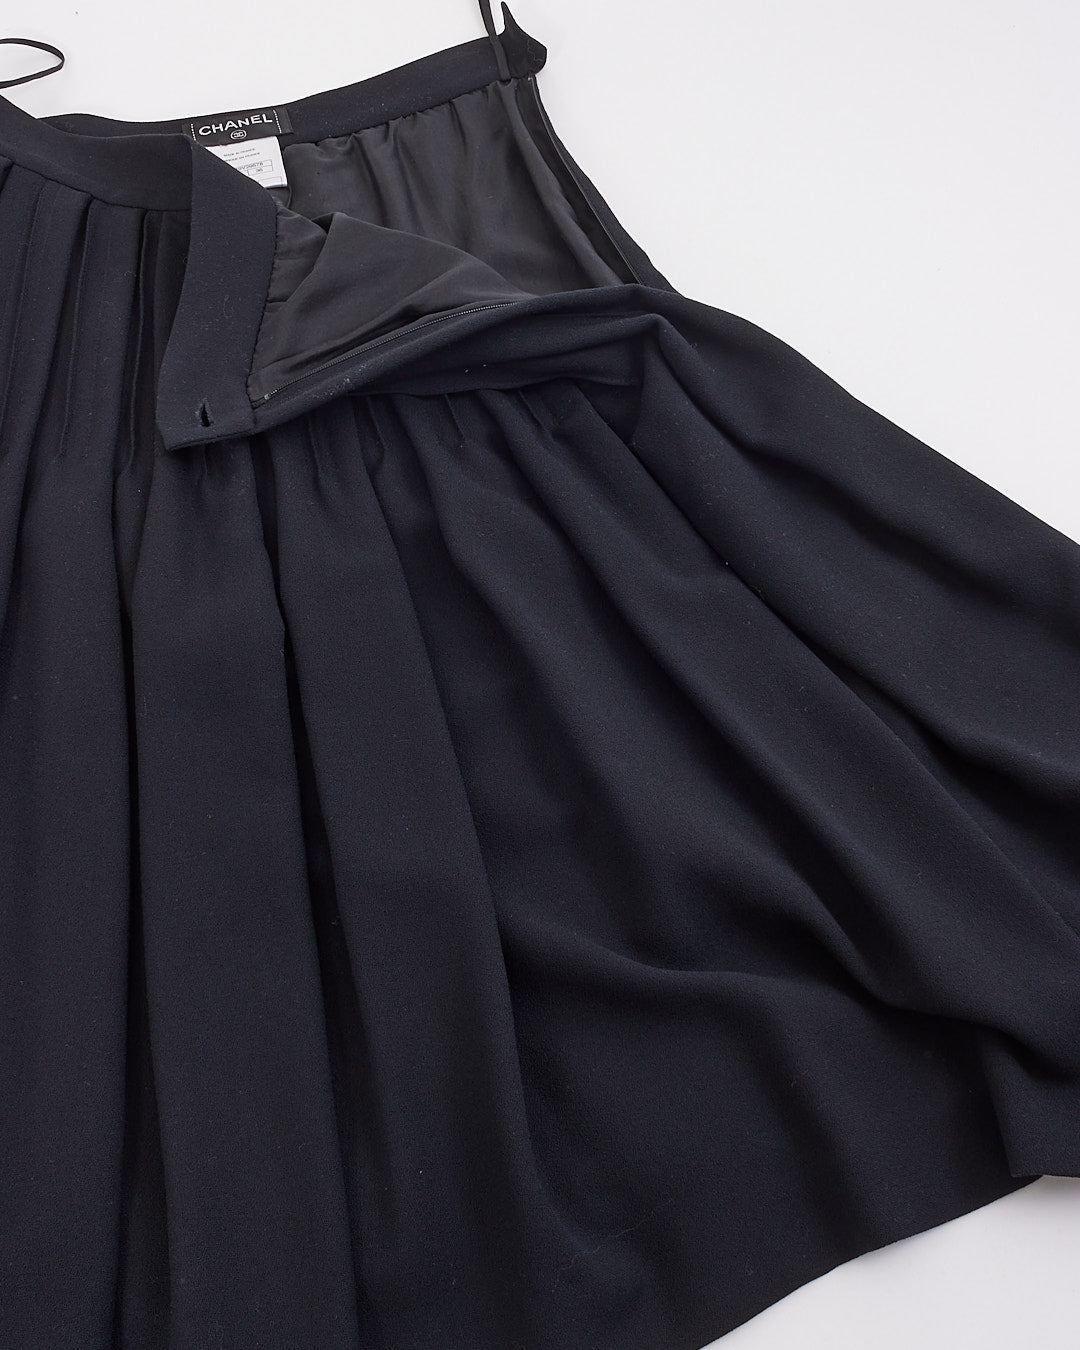 Chanel Black Crepe Pleated Skirt - 36